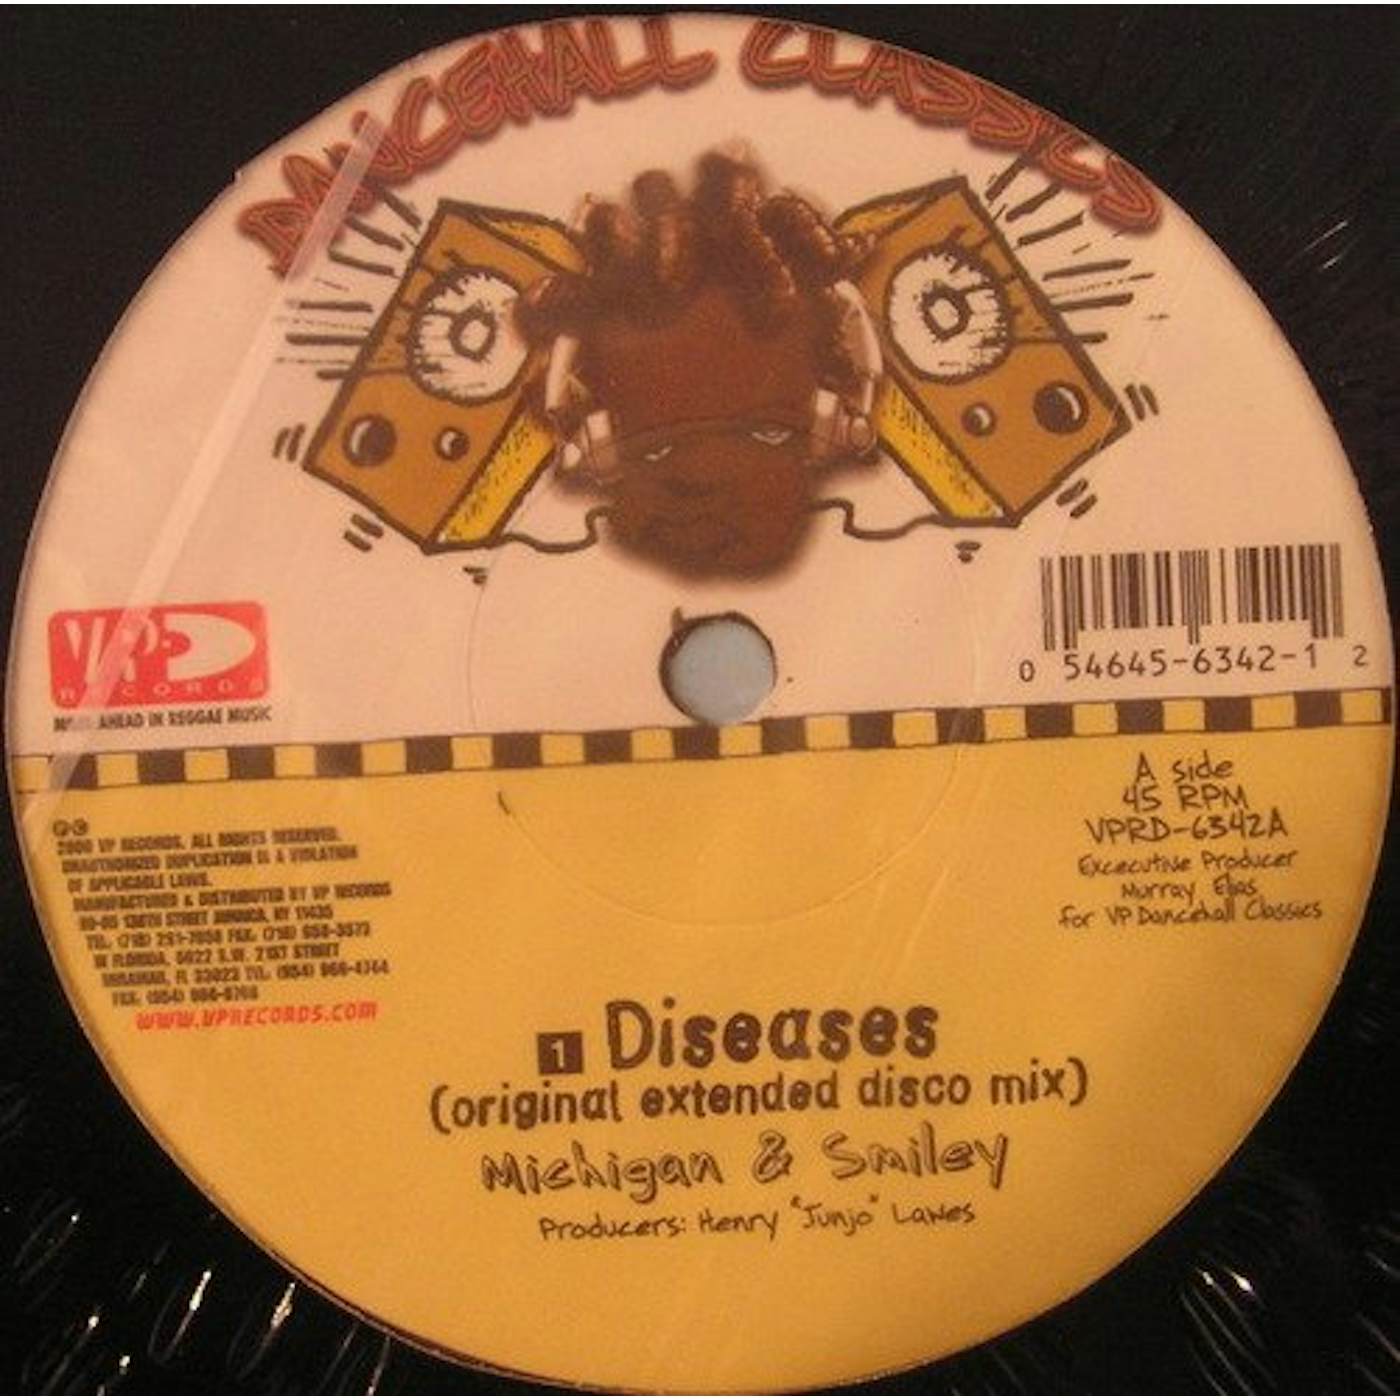 Michigan & Smily DISEAESES Vinyl Record